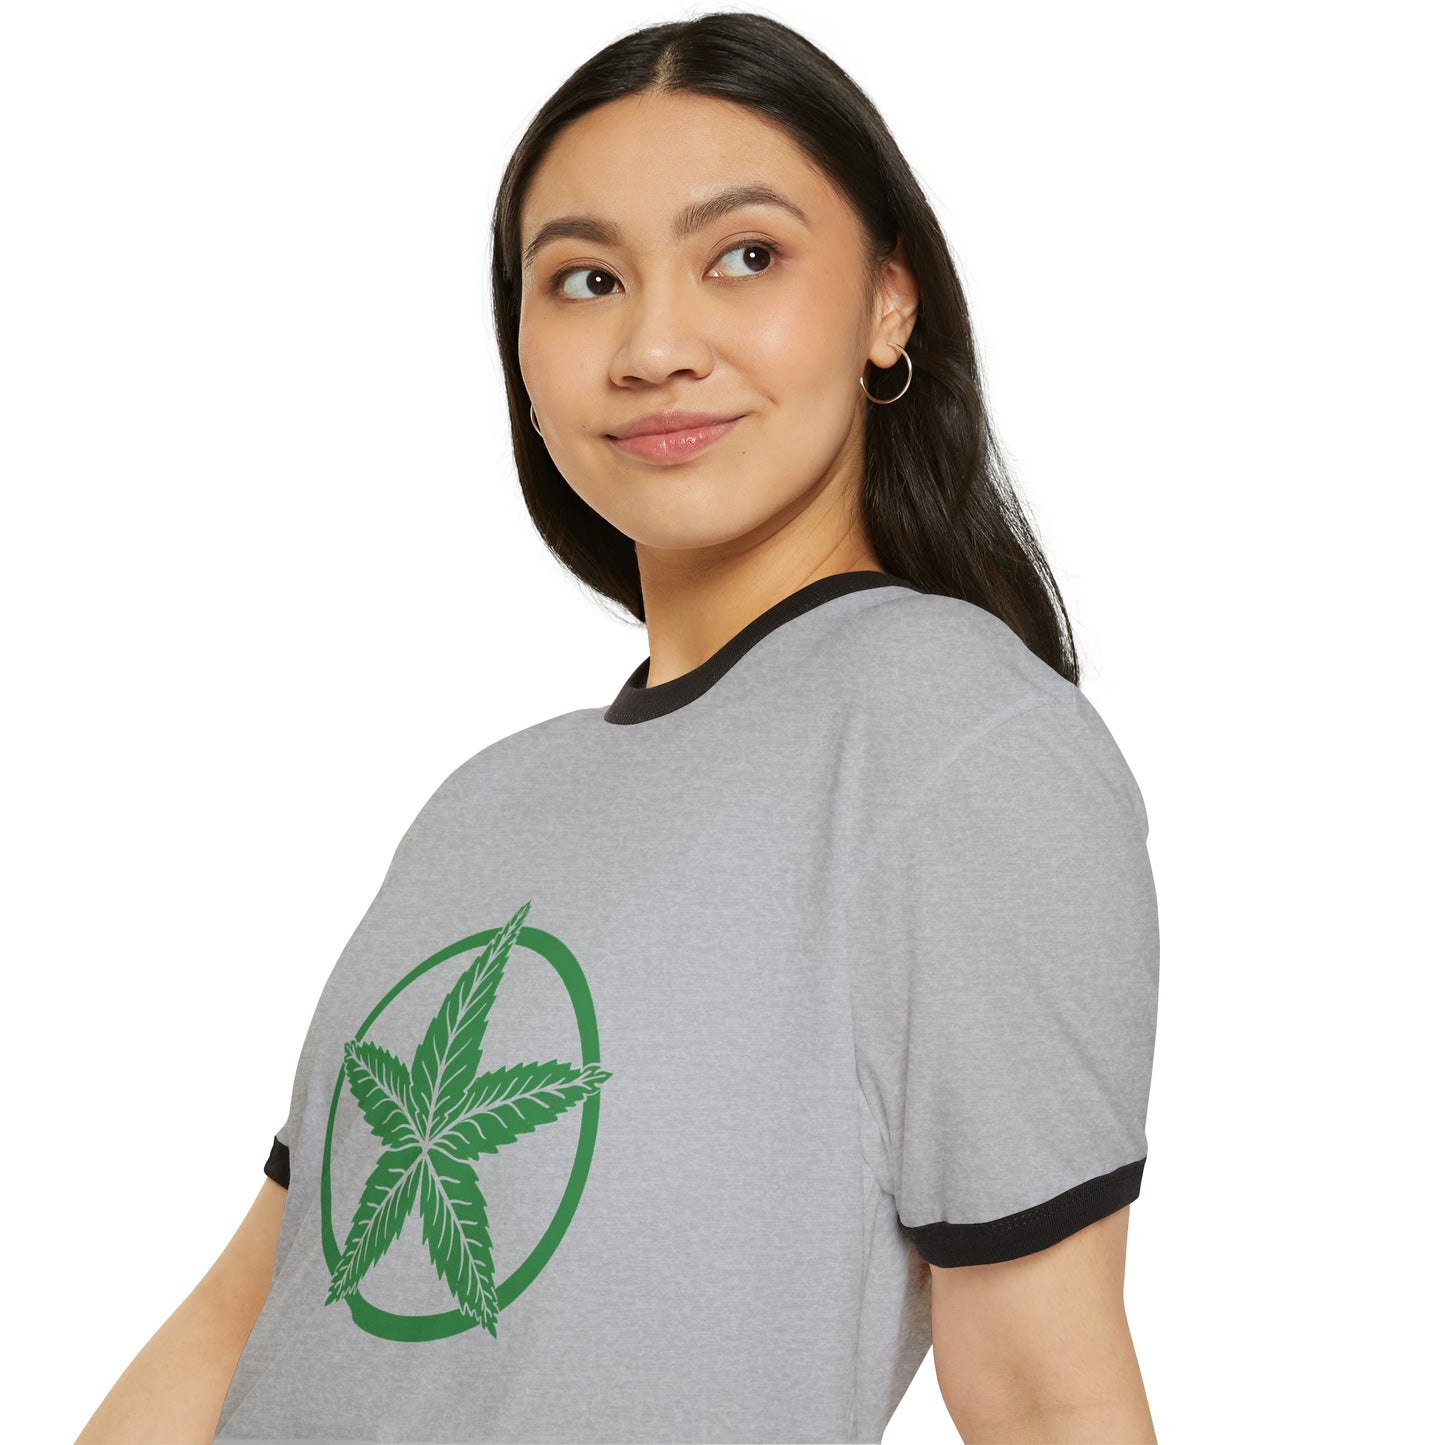 Green Army Leaf Unisex Cotton Ringer T-Shirt